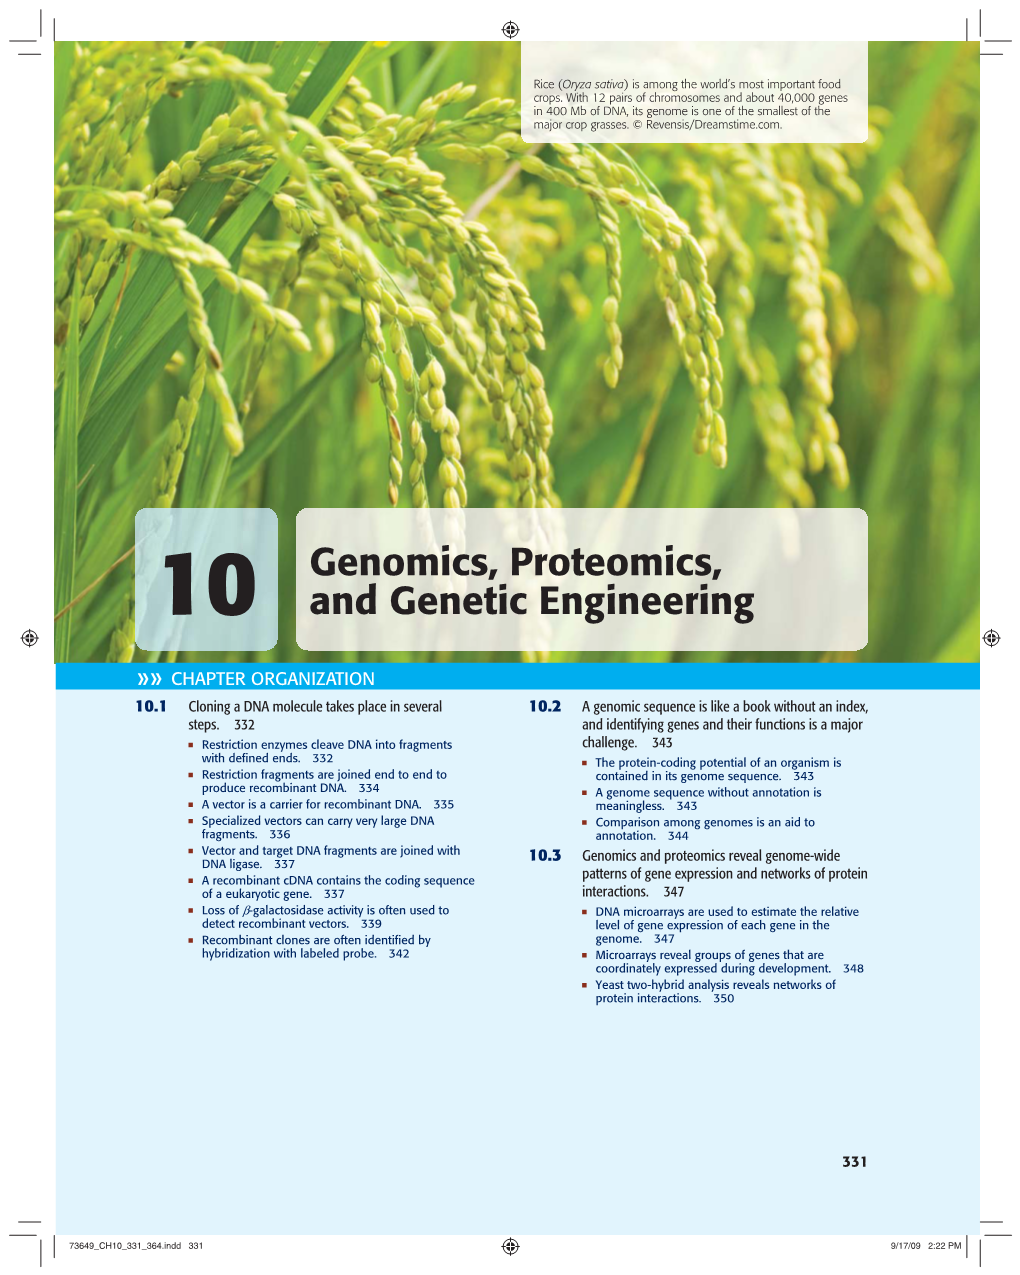 Genomics, Proteomics, and Genetic Engineering